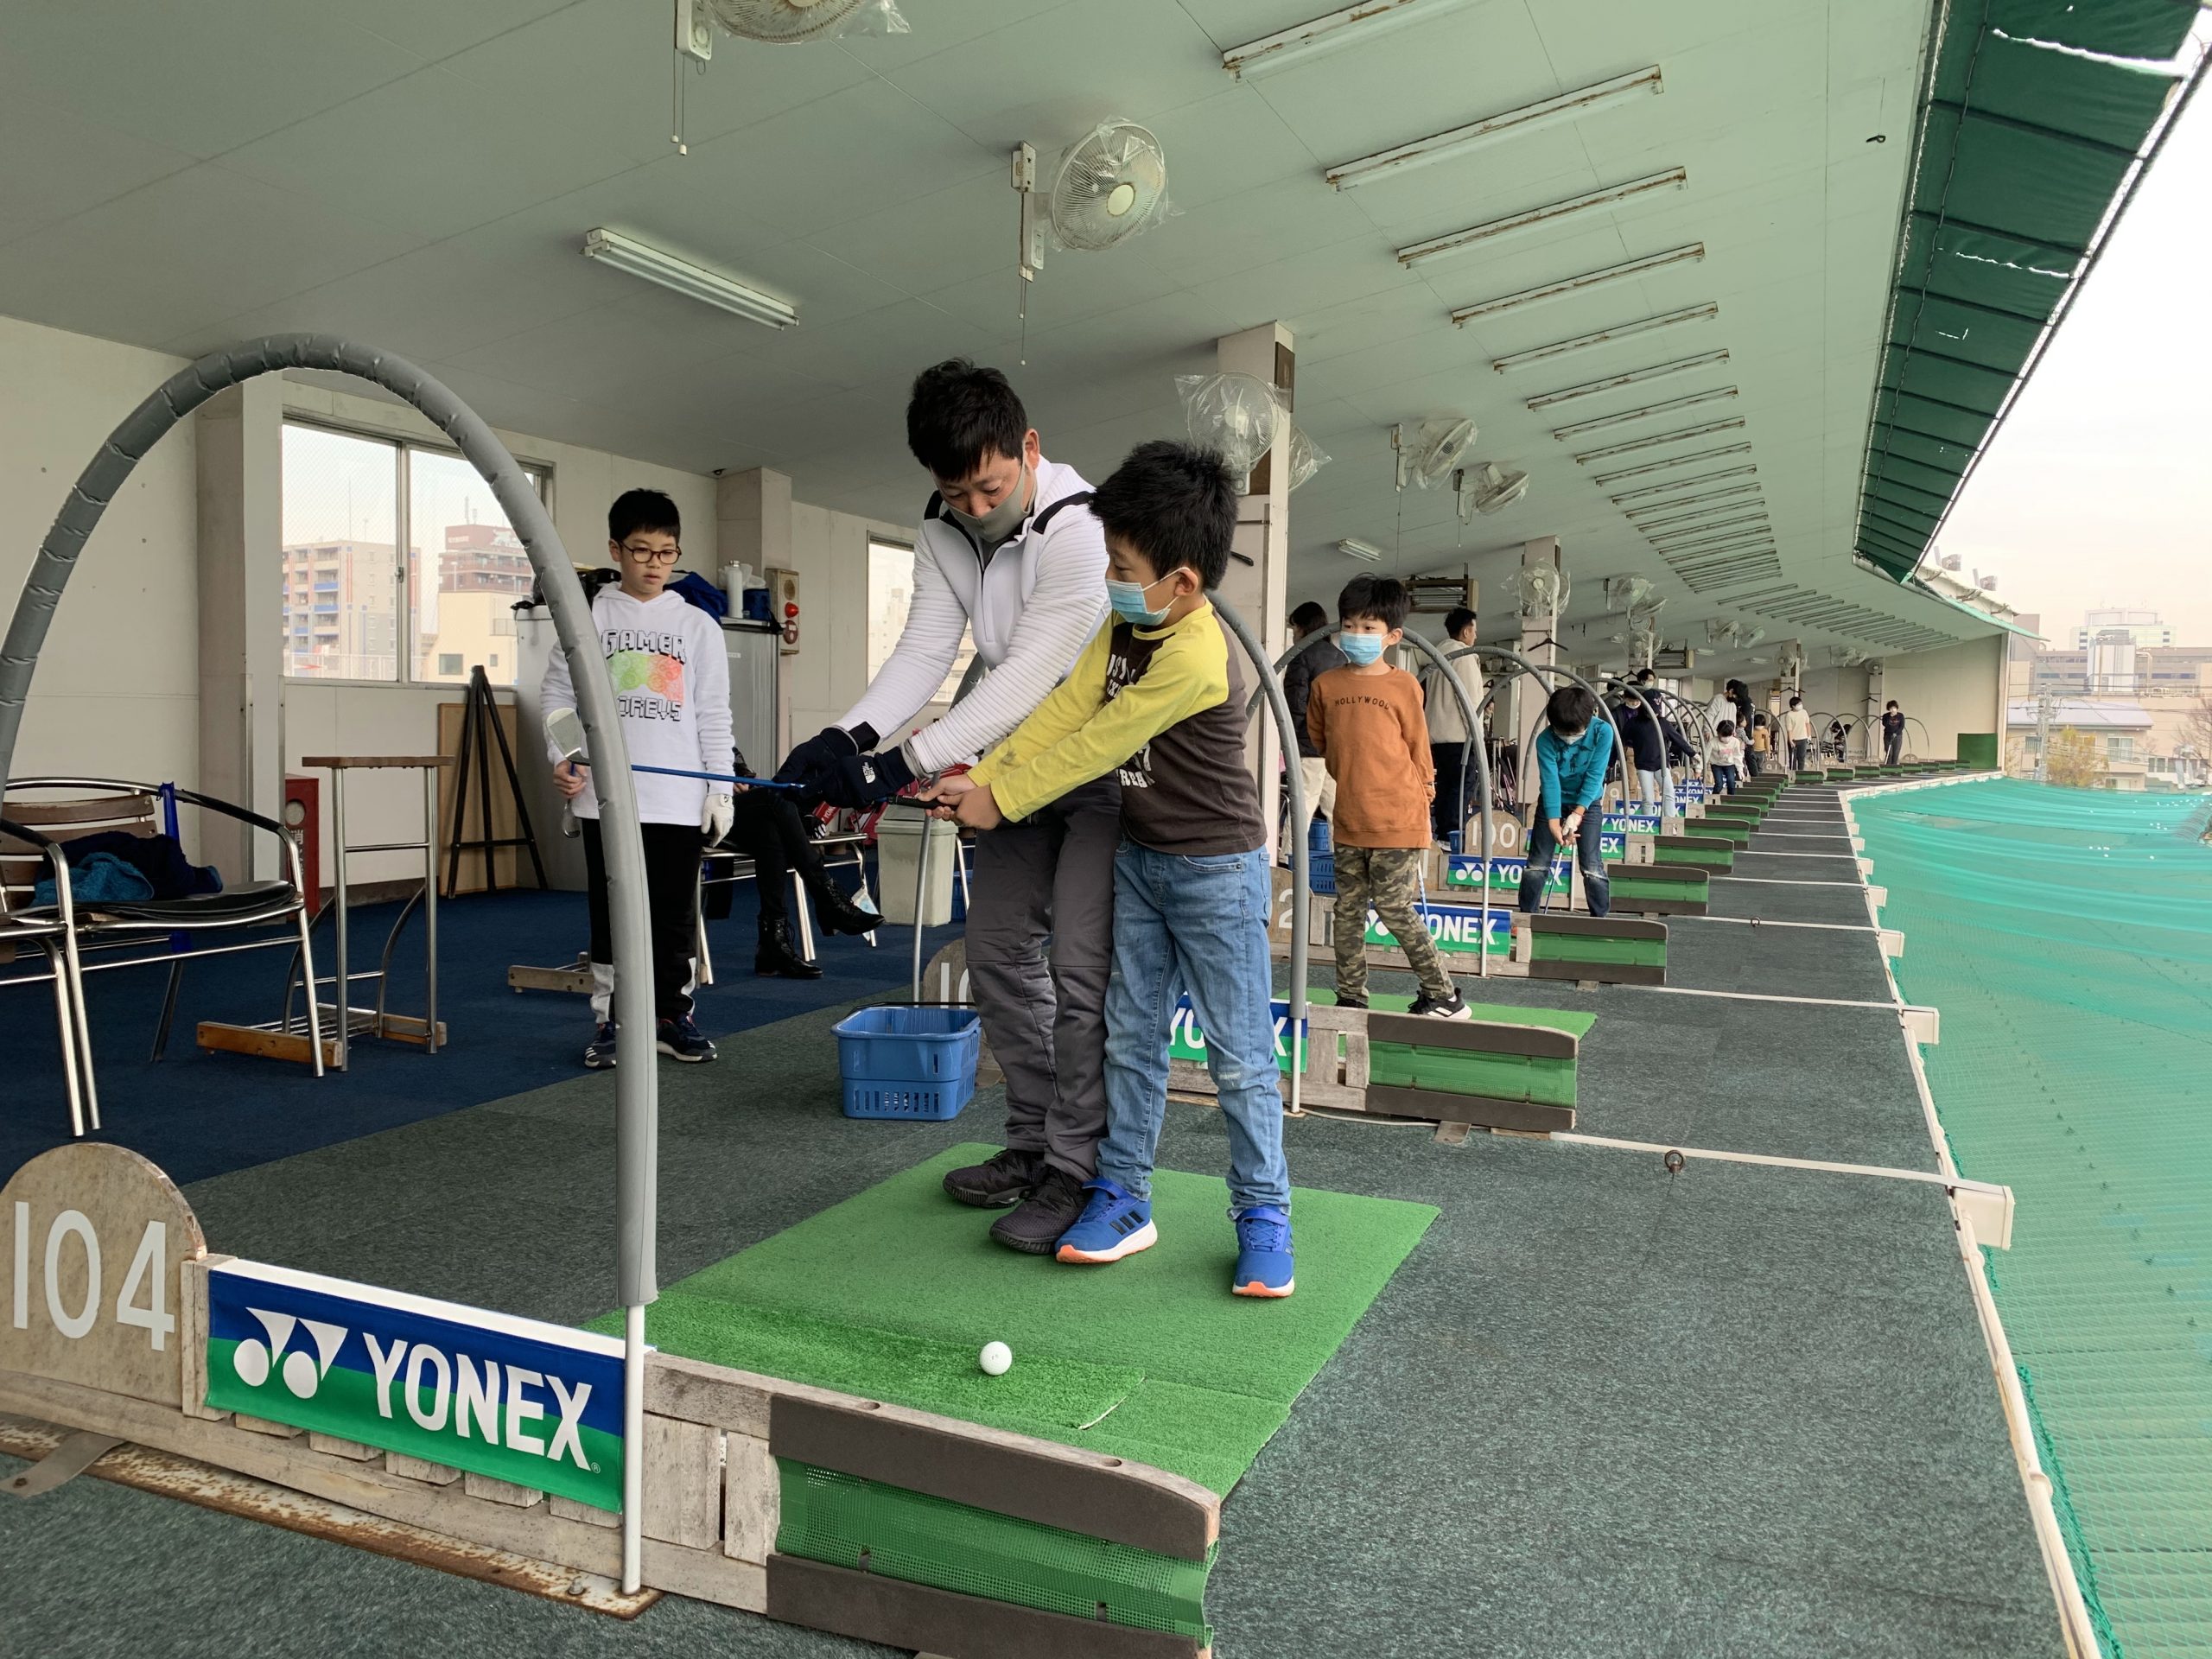 YJGA（ヨネックスジュニアゴルフアカデミー） 江戸川校の雰囲気がわかる写真